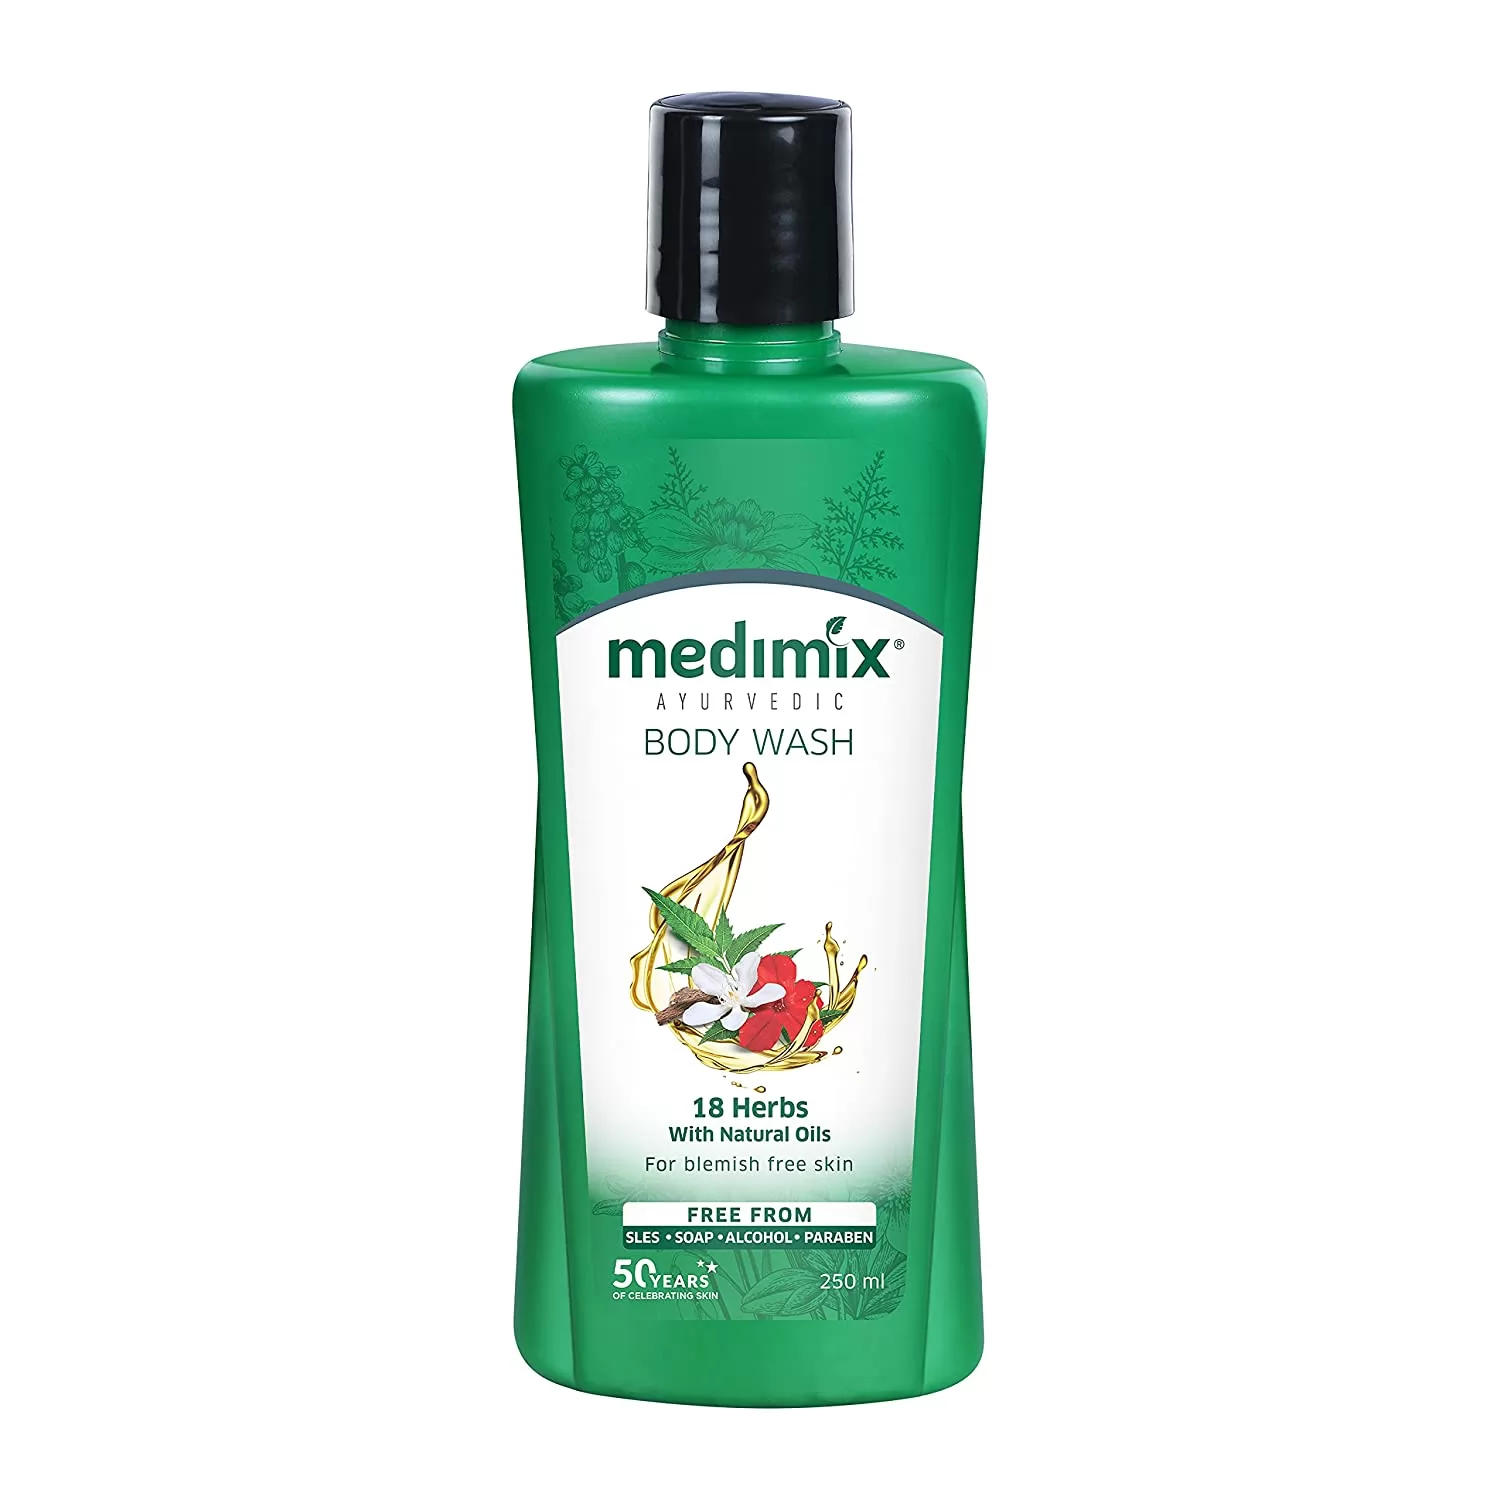 Medimix Ayurvedic 18 Herbs with Natural Oils Body Wash